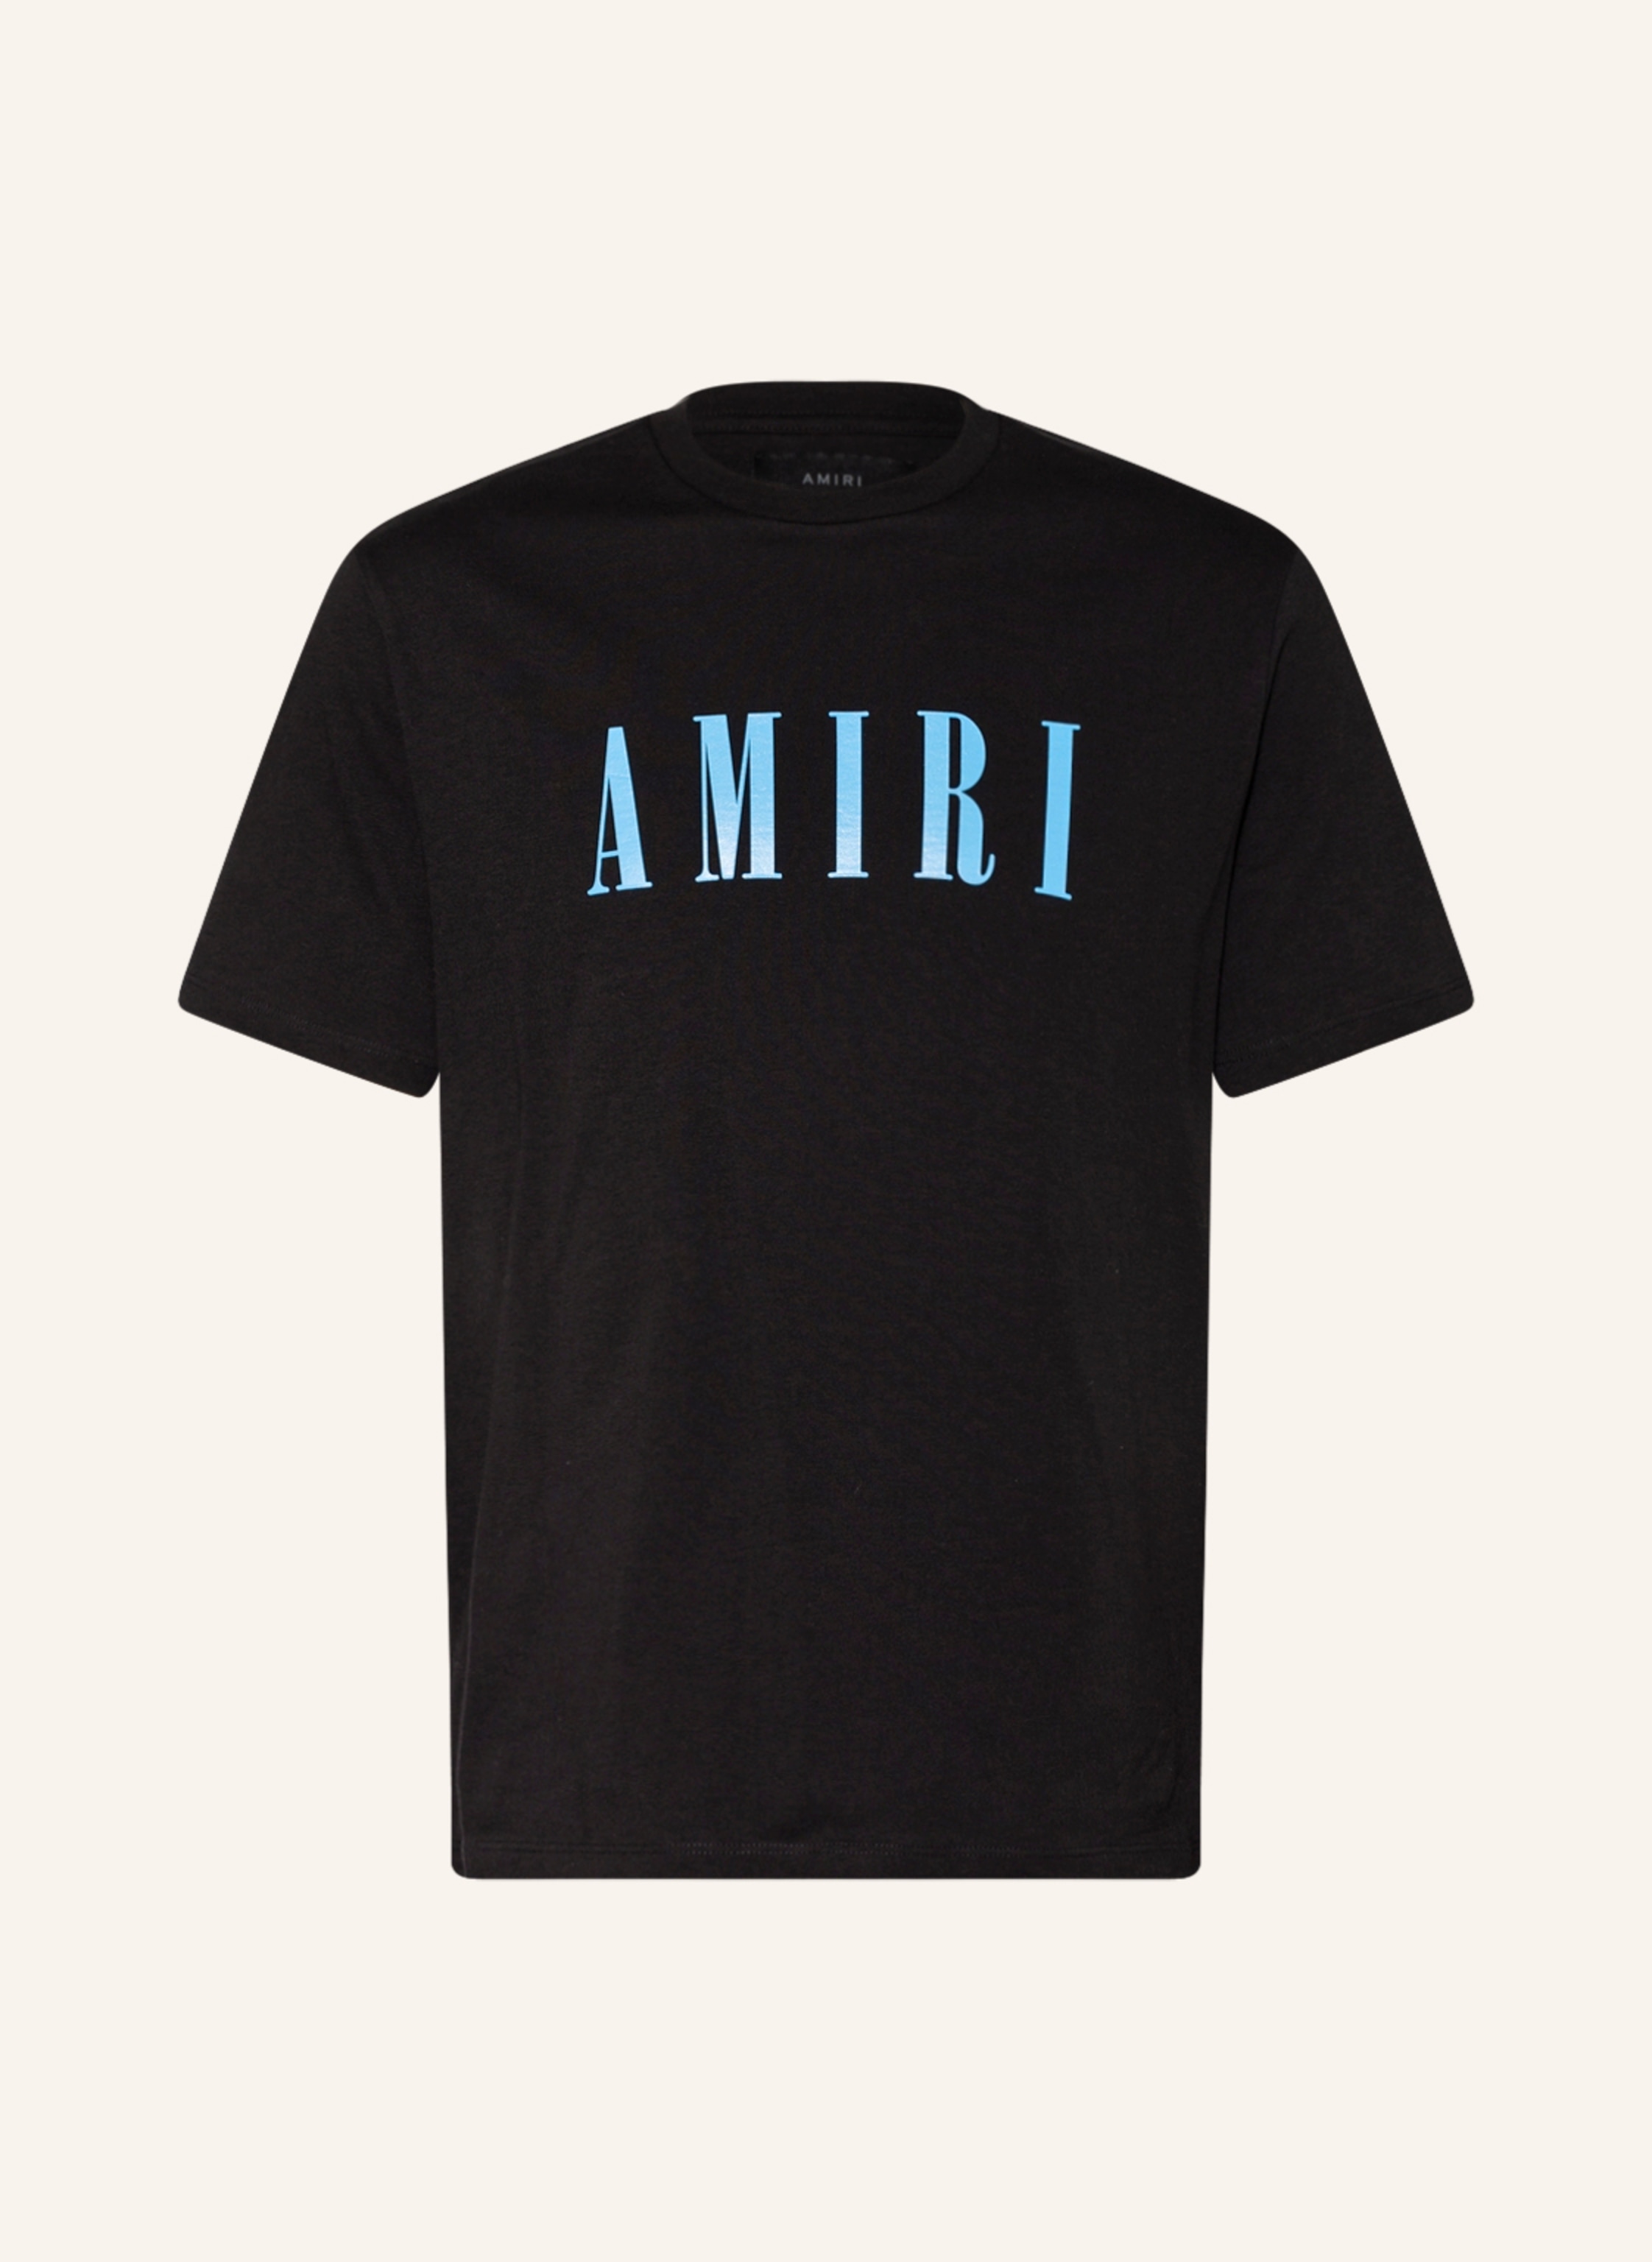 Mike Männer AmiriAMIRI T-Shirt T-Shirt - mit Logo-Print Amiri ...